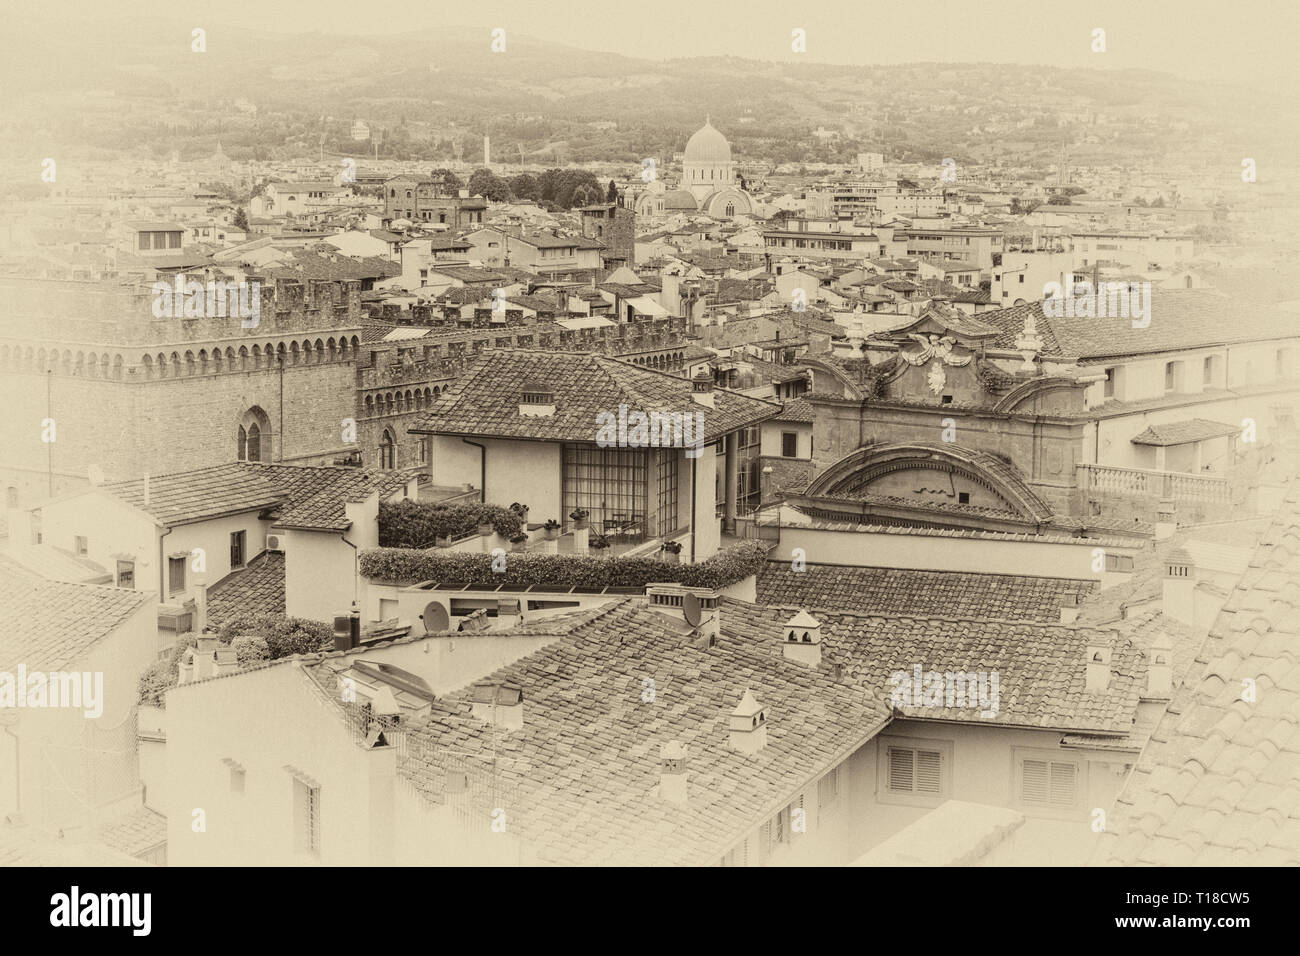 Sinagoga Comunità Ebraica aus dem Palazzo Vecchio in Florenz, Toskana, Italien gesehen. Stockfoto